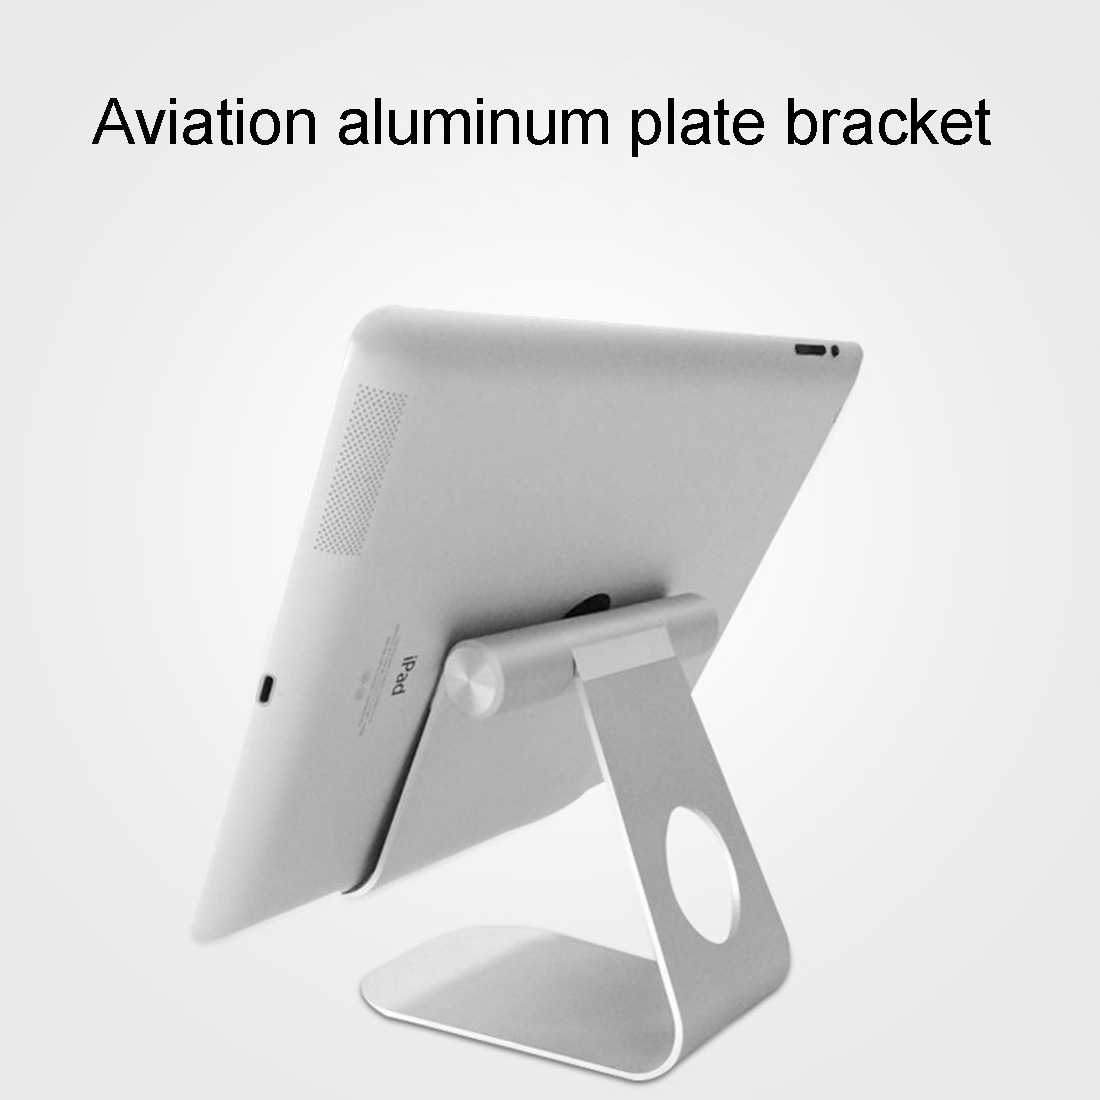 Aluminium standaard voor iPad & Tablets